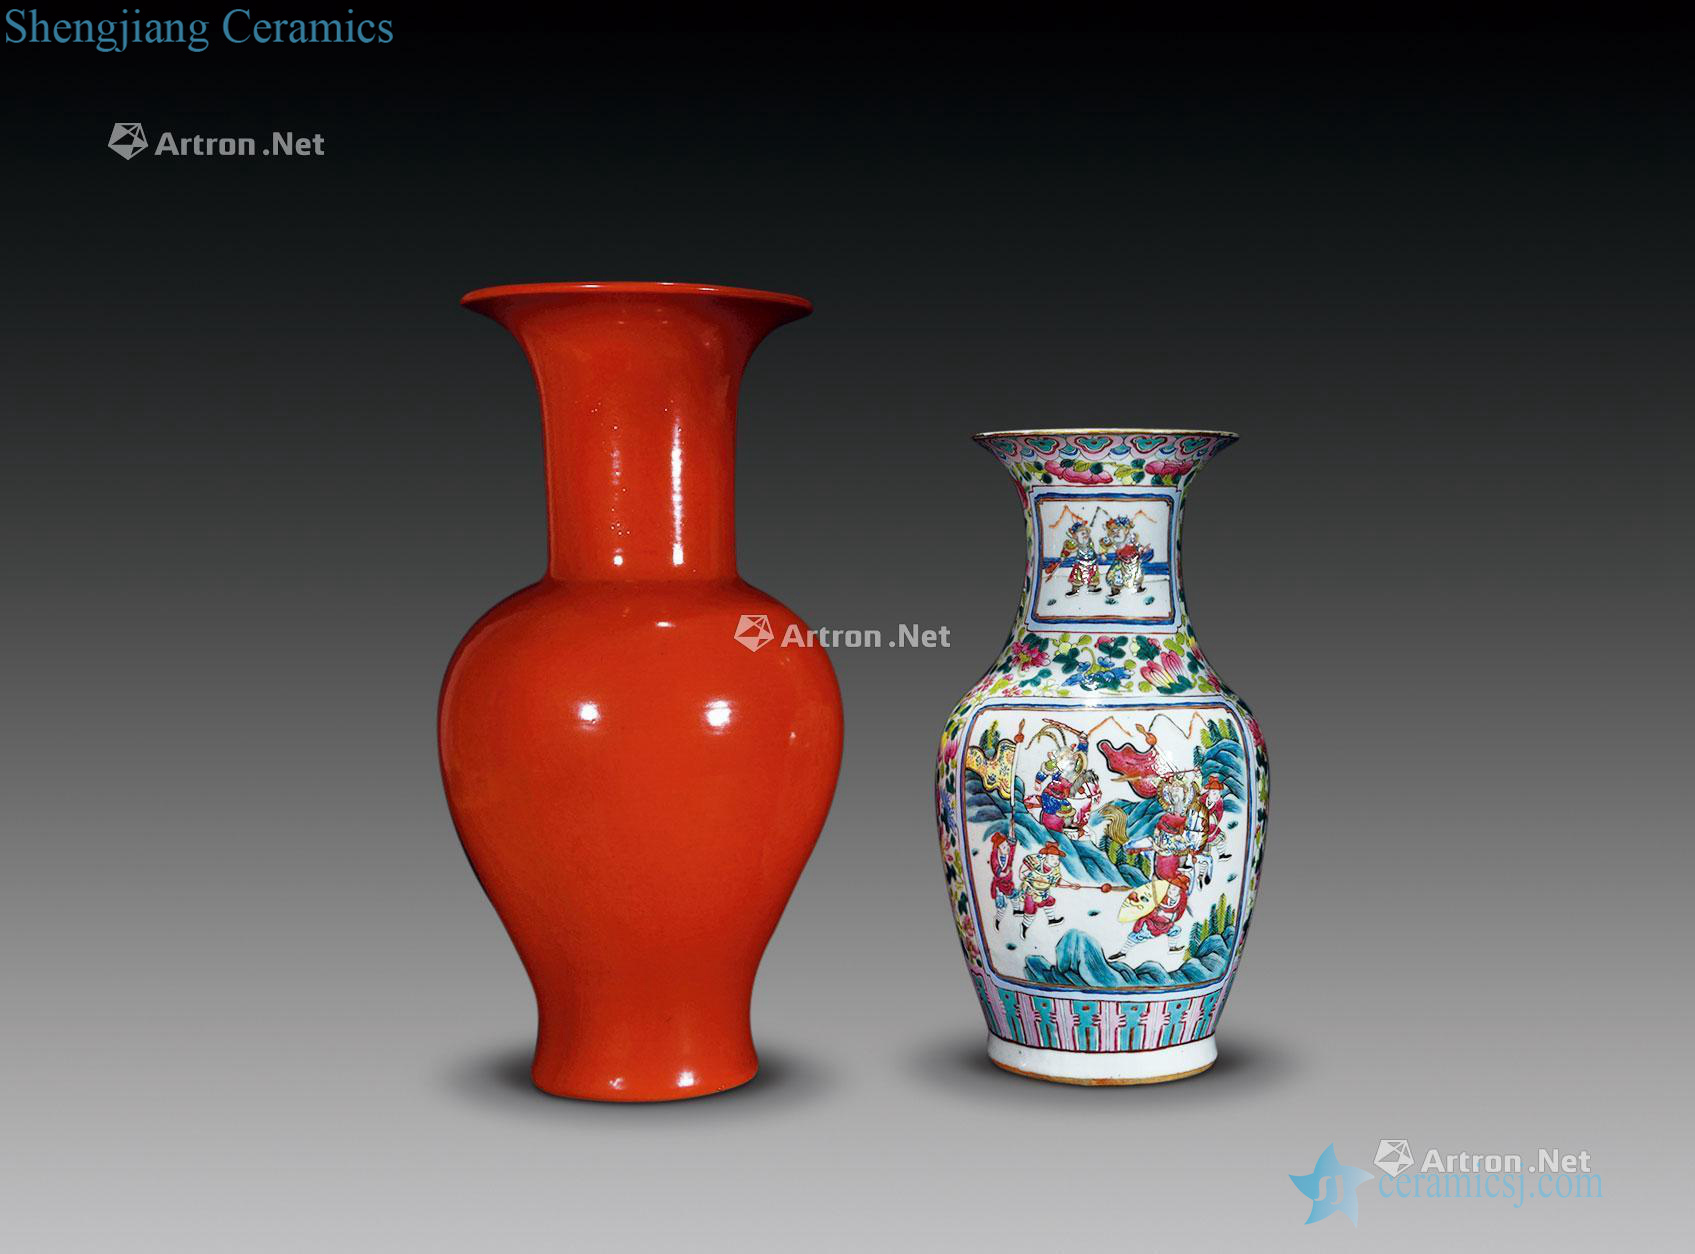 Black powder enamel coral red vase each one